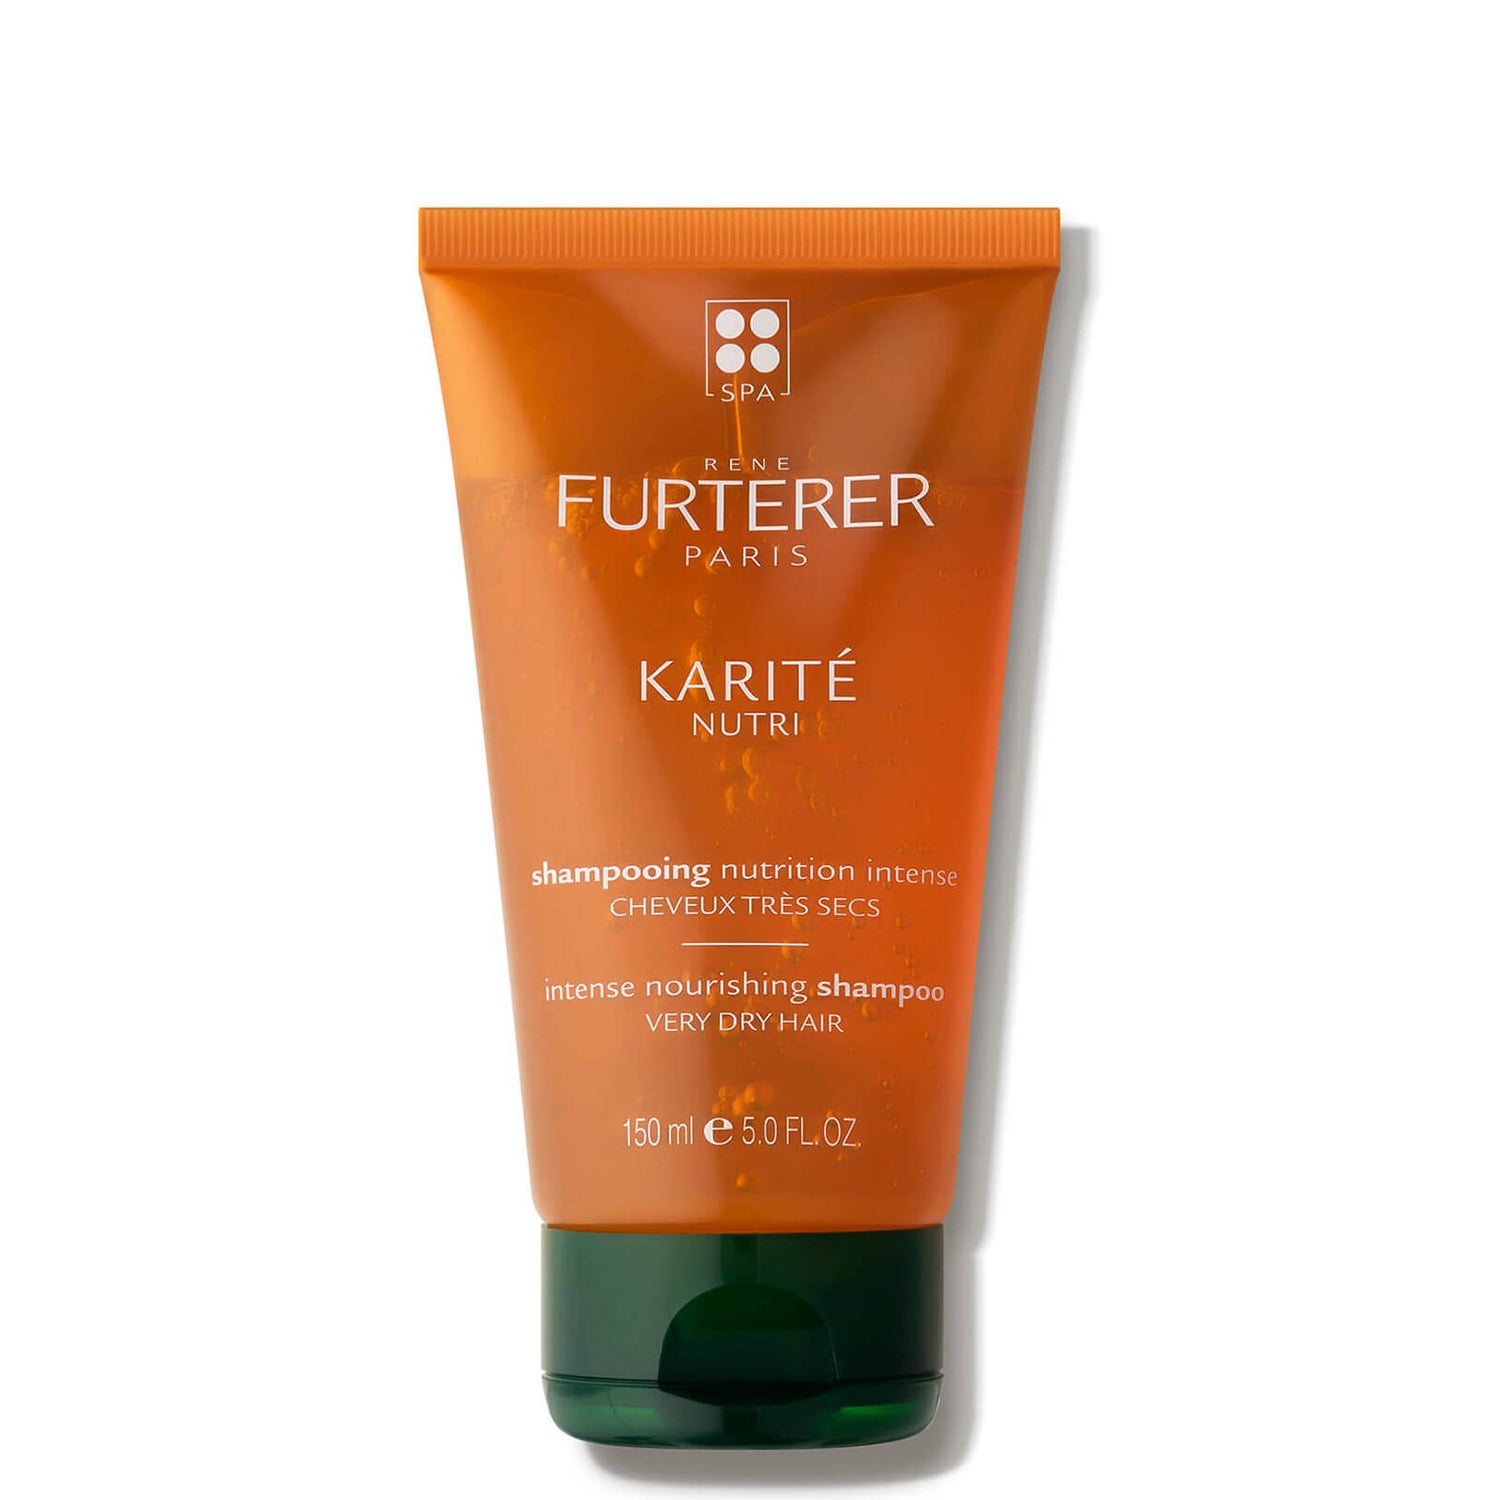 René Furterer KARIT NUTRI Intense Nourishing Shampoo (5 fl. oz.)